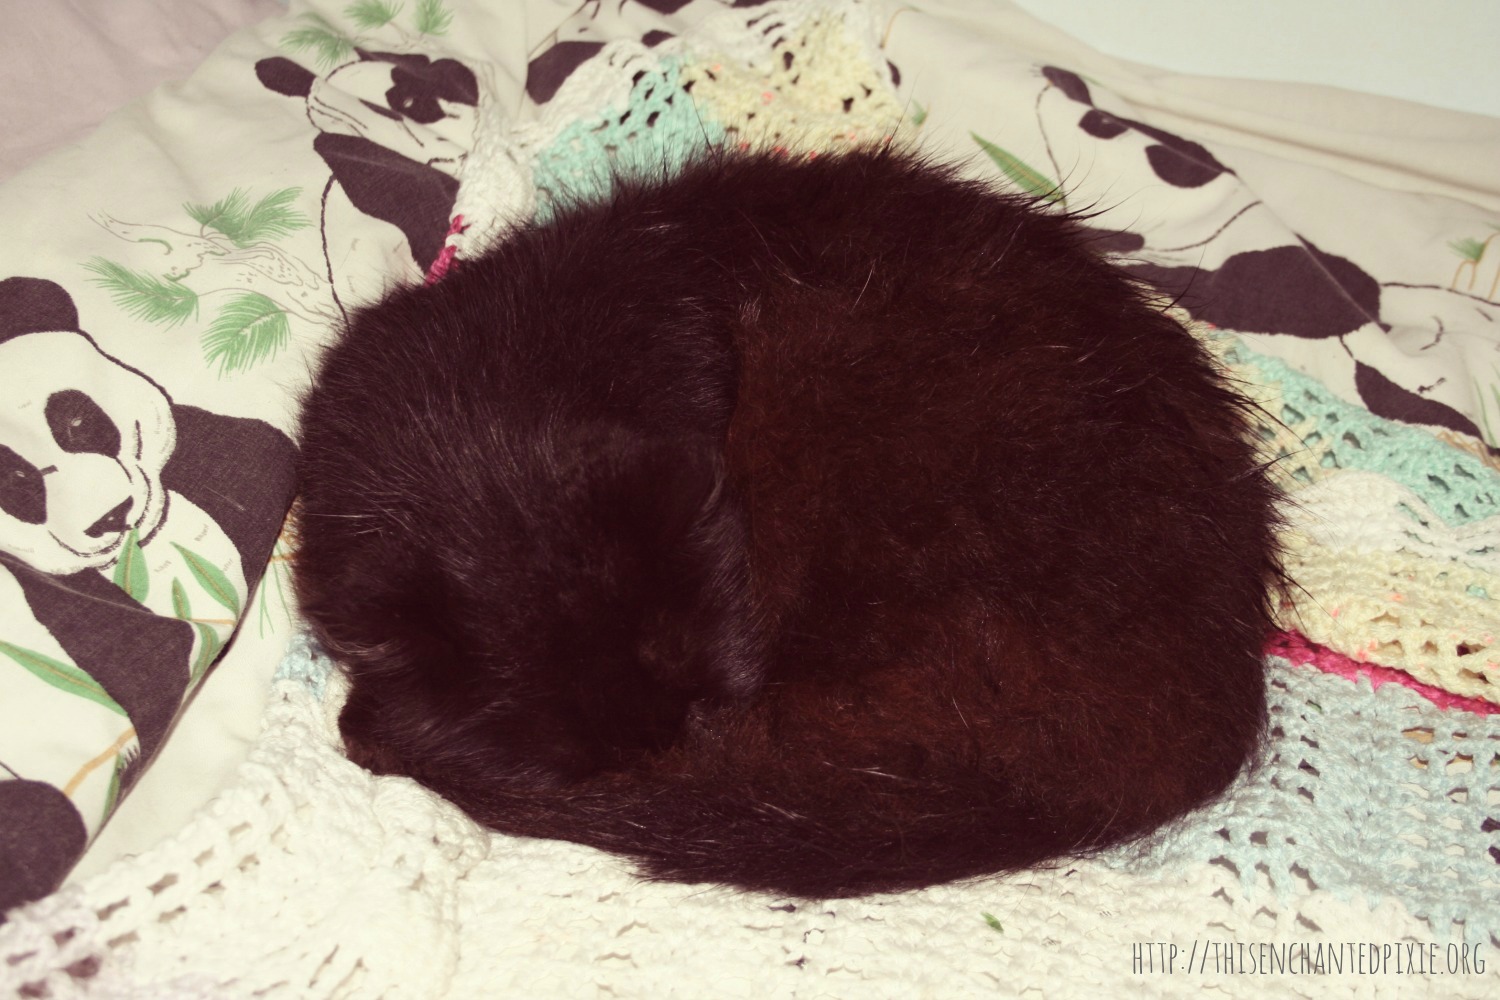 Mr Bear sleeping cat